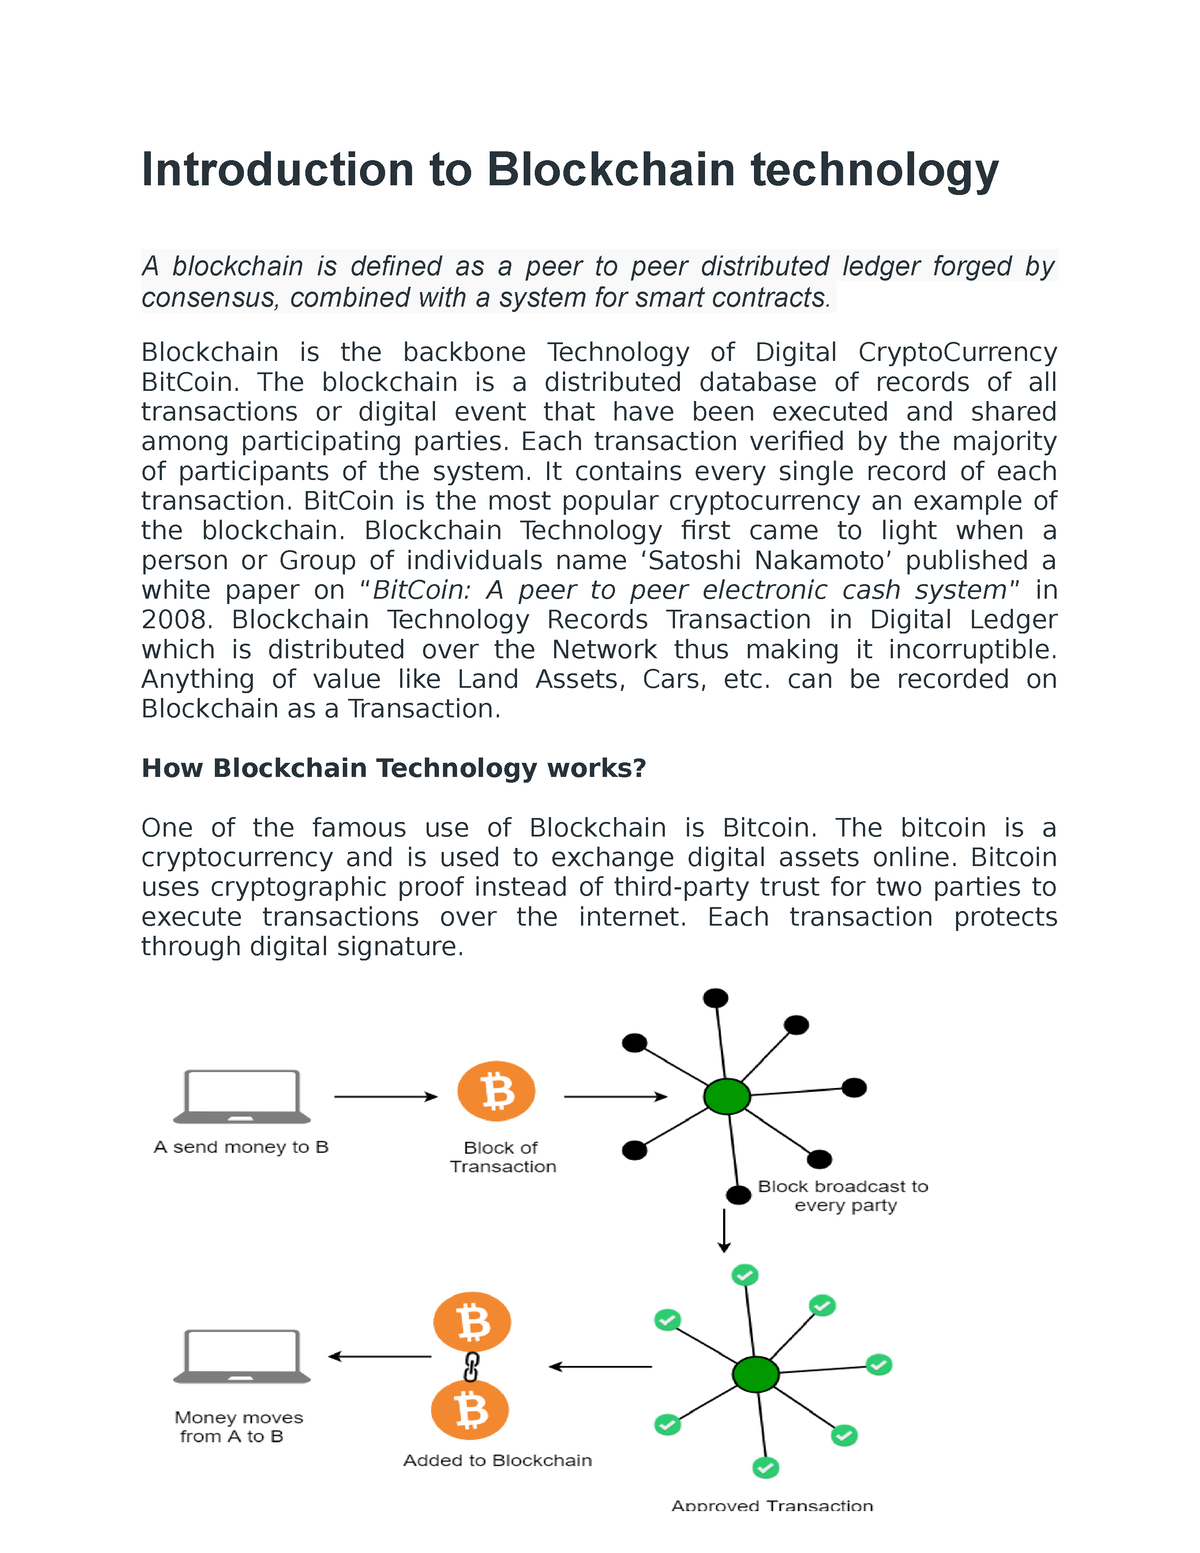 research paper topics on blockchain